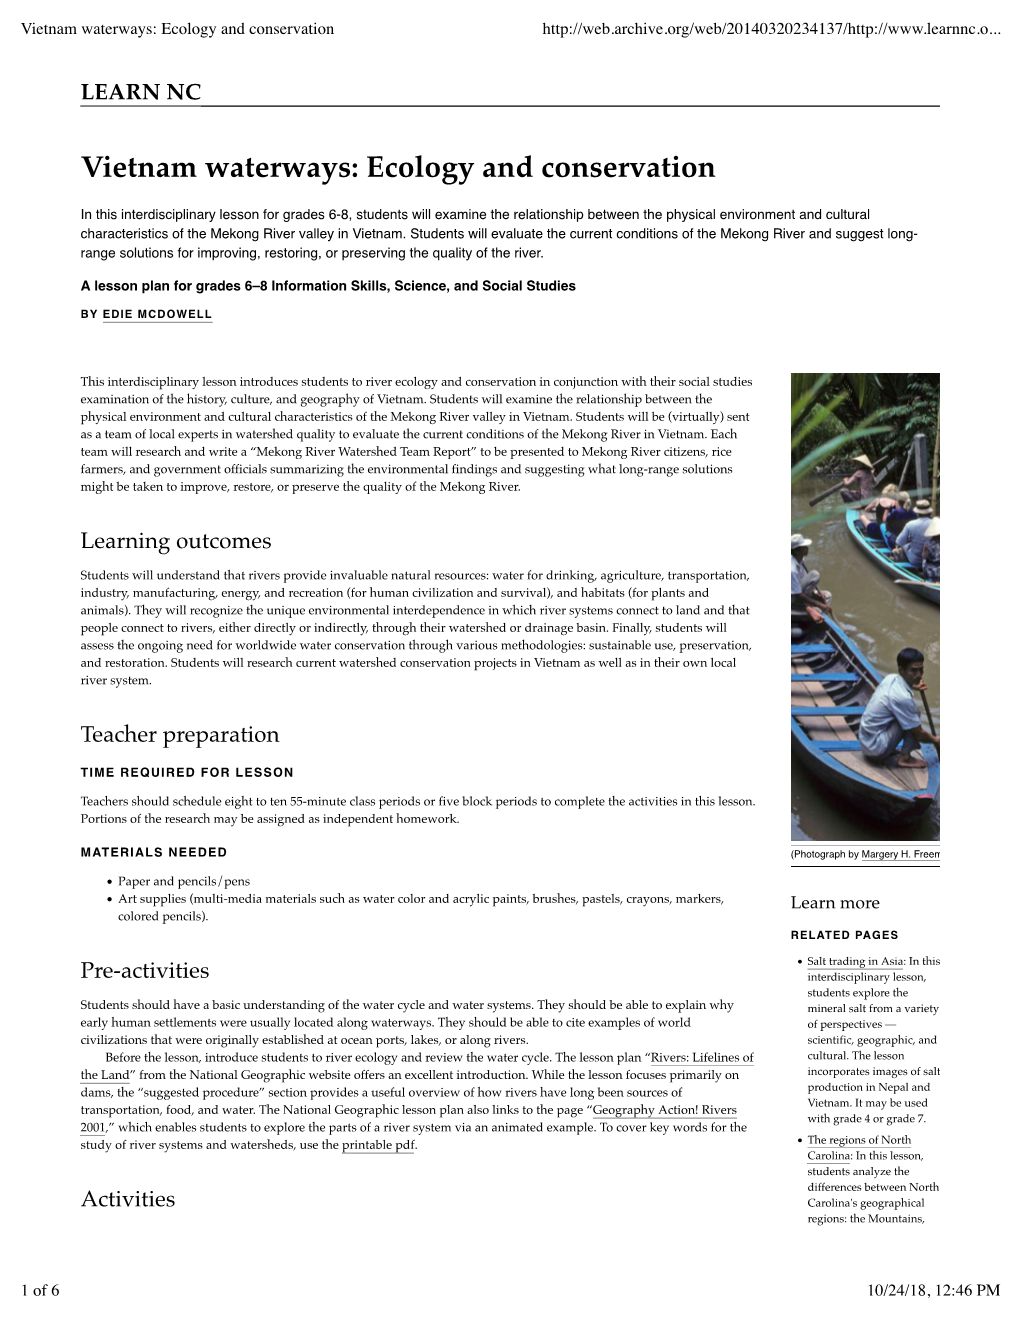 Vietnam Waterways: Ecology and Conservation